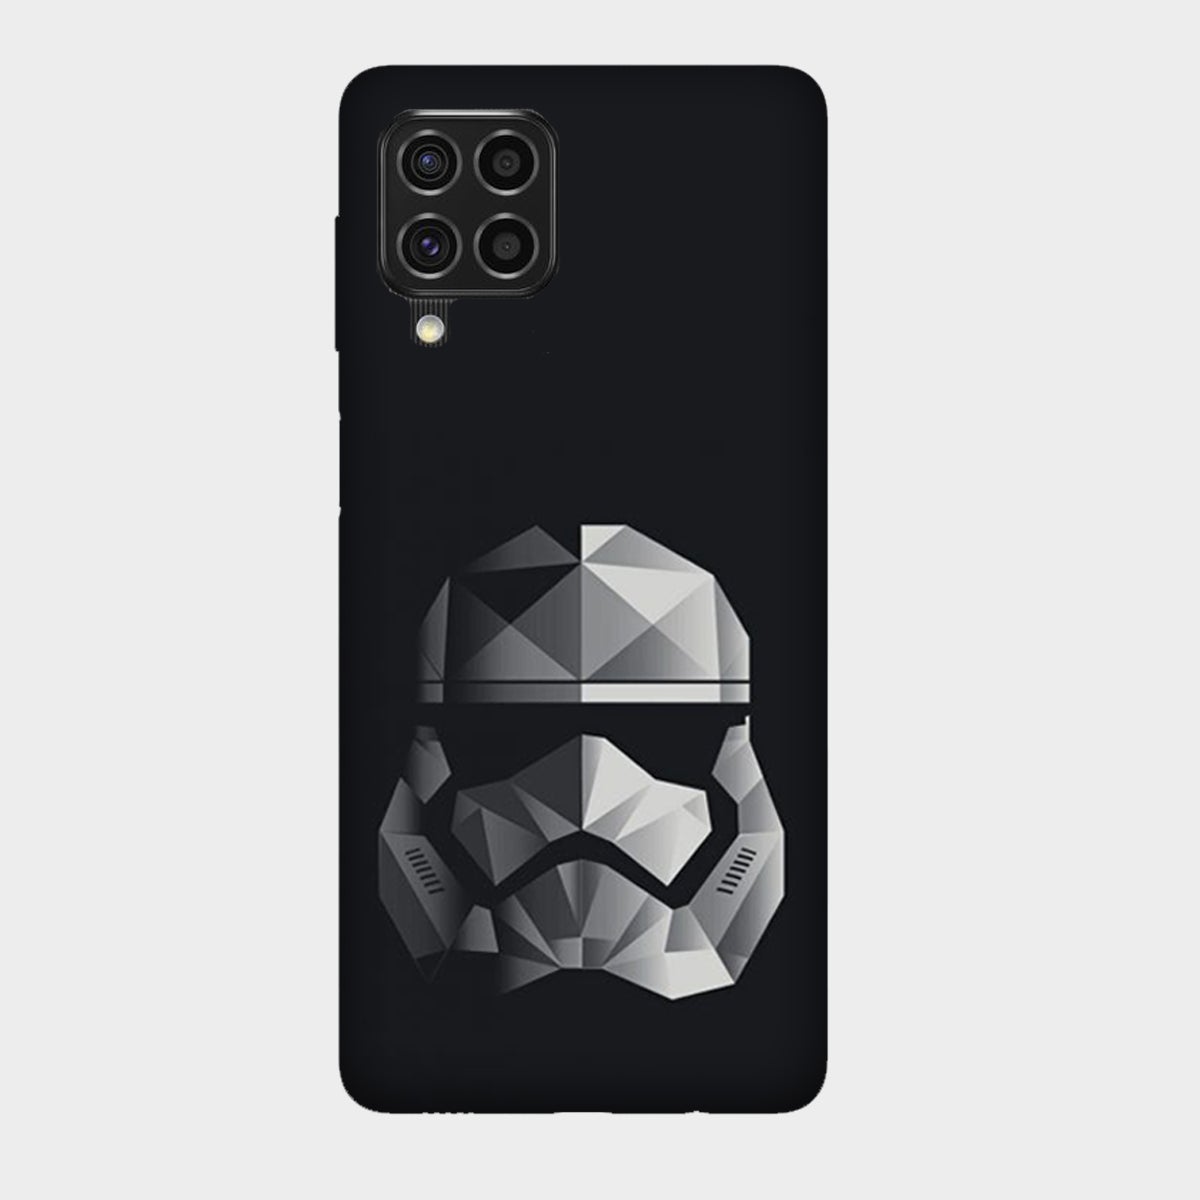 Star Wars - Darth Vader - Mobile Phone Cover - Hard Case - Samsung - Samsung